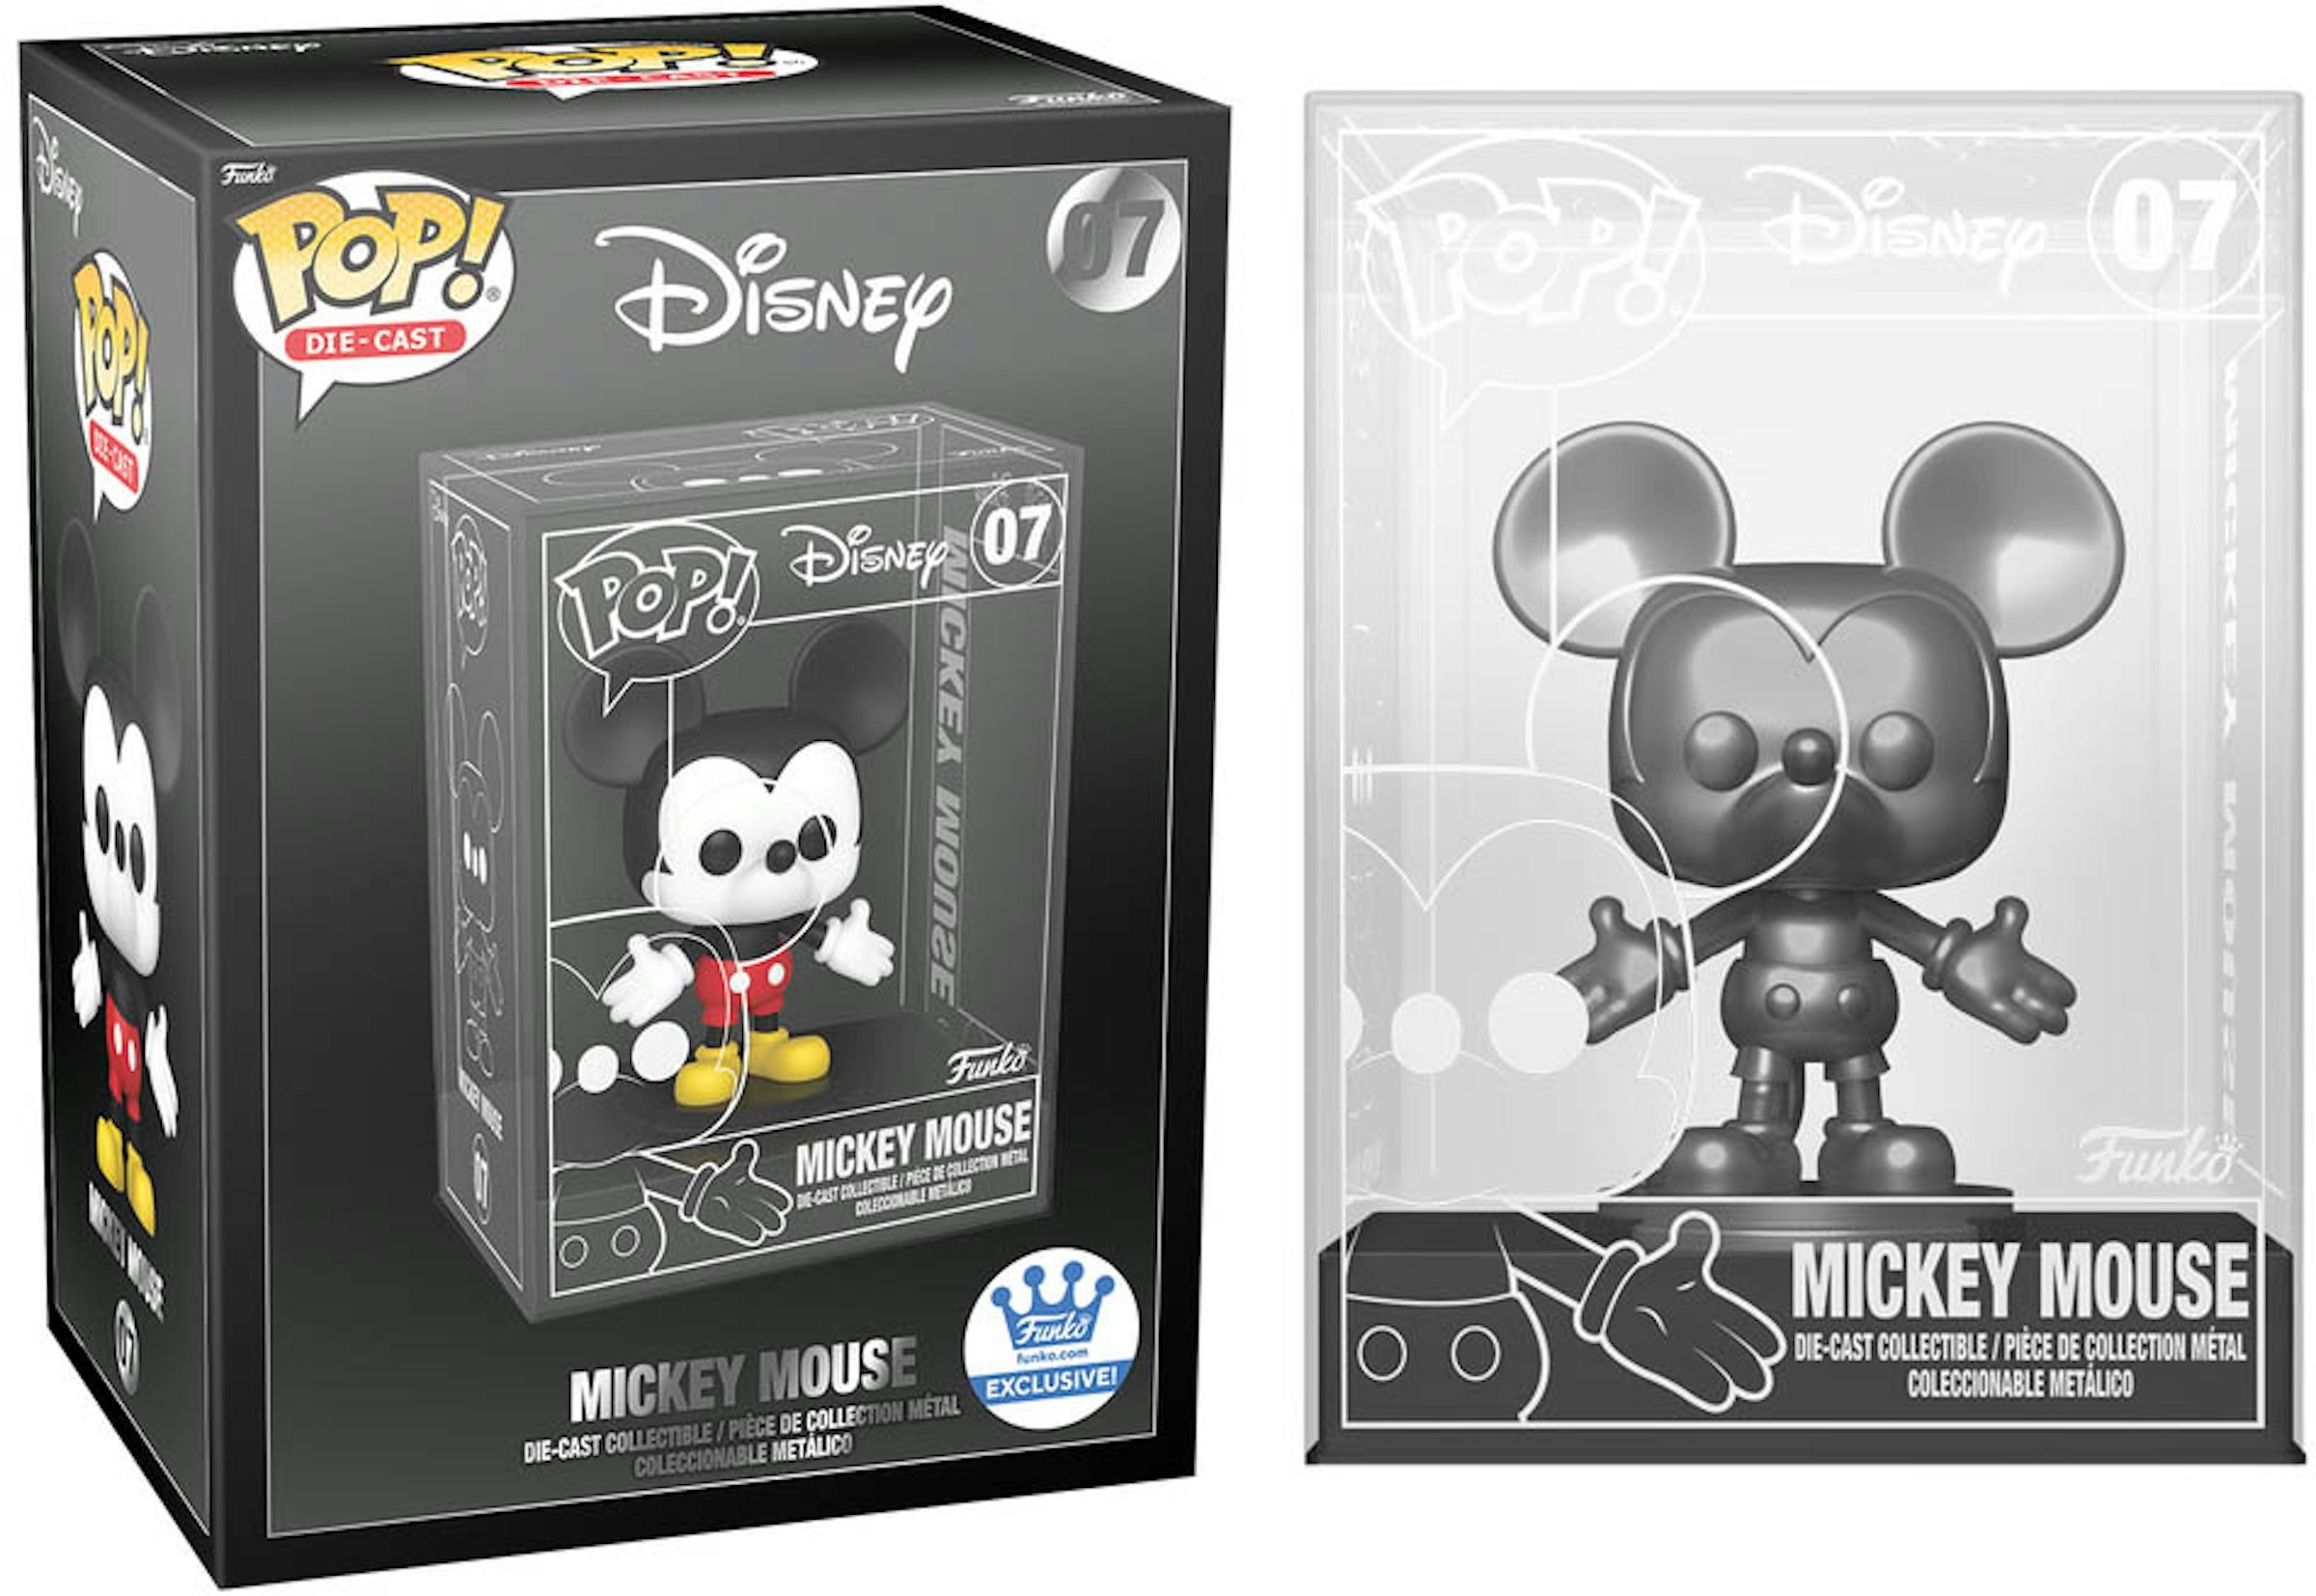 Creyente Porra Seminario Funko Pop! Die-Cast Disney Mickey Mouse Chase Edition Funko Shop Exclusive  Figure #07 - US